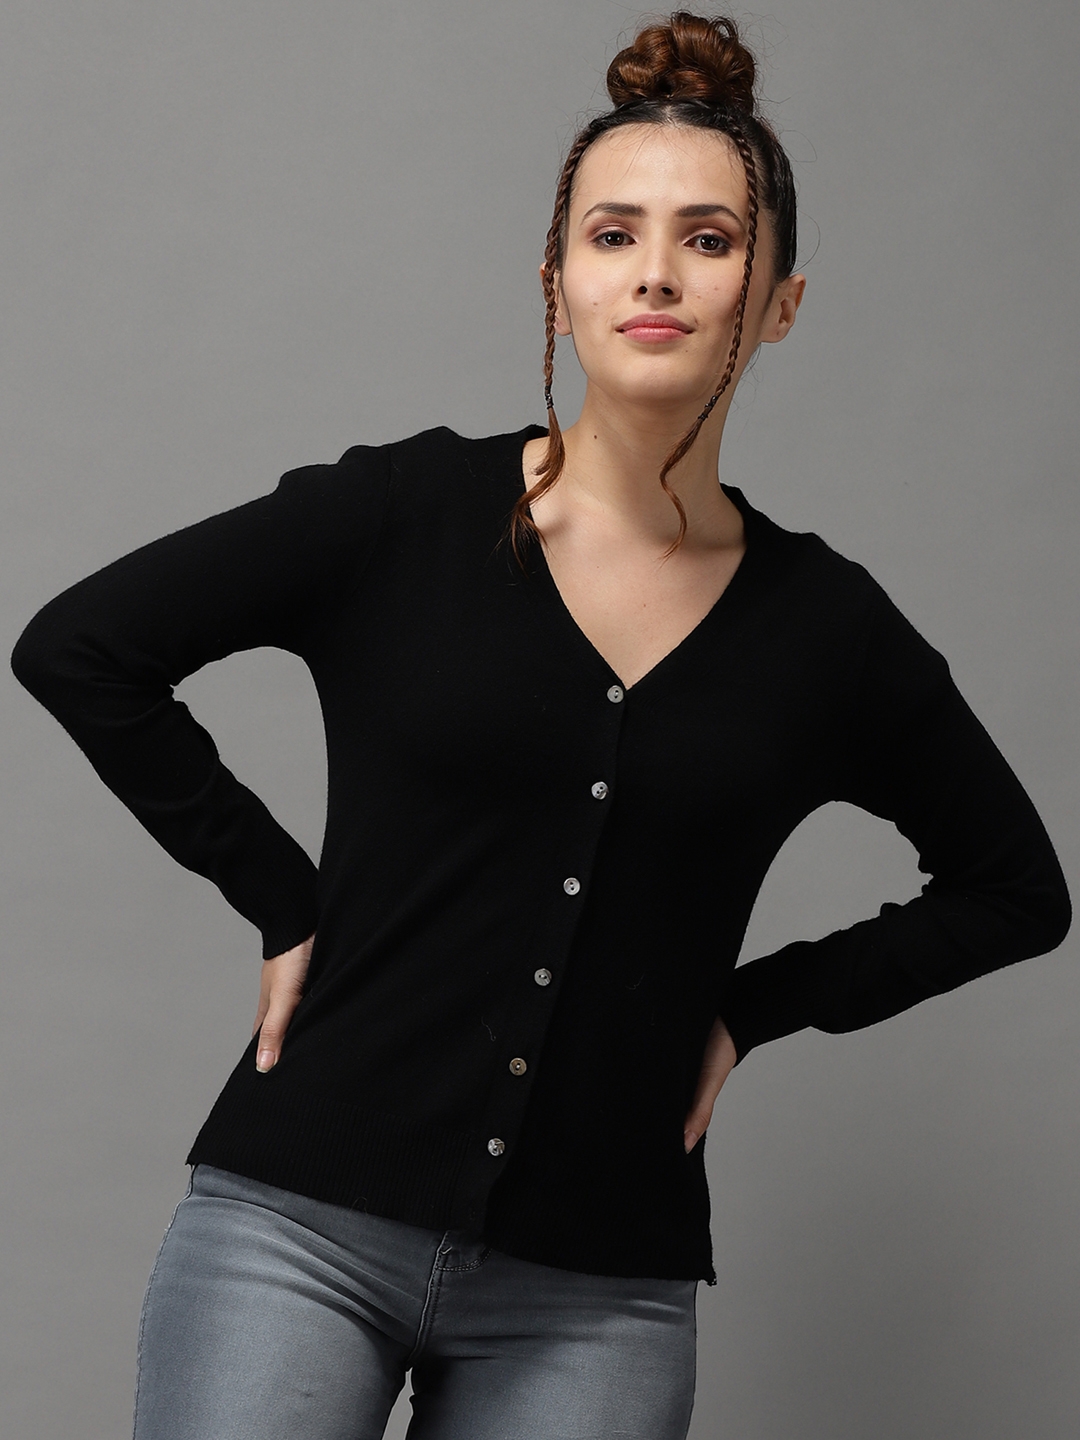 Women's Black Acrylic Solid Sweaters